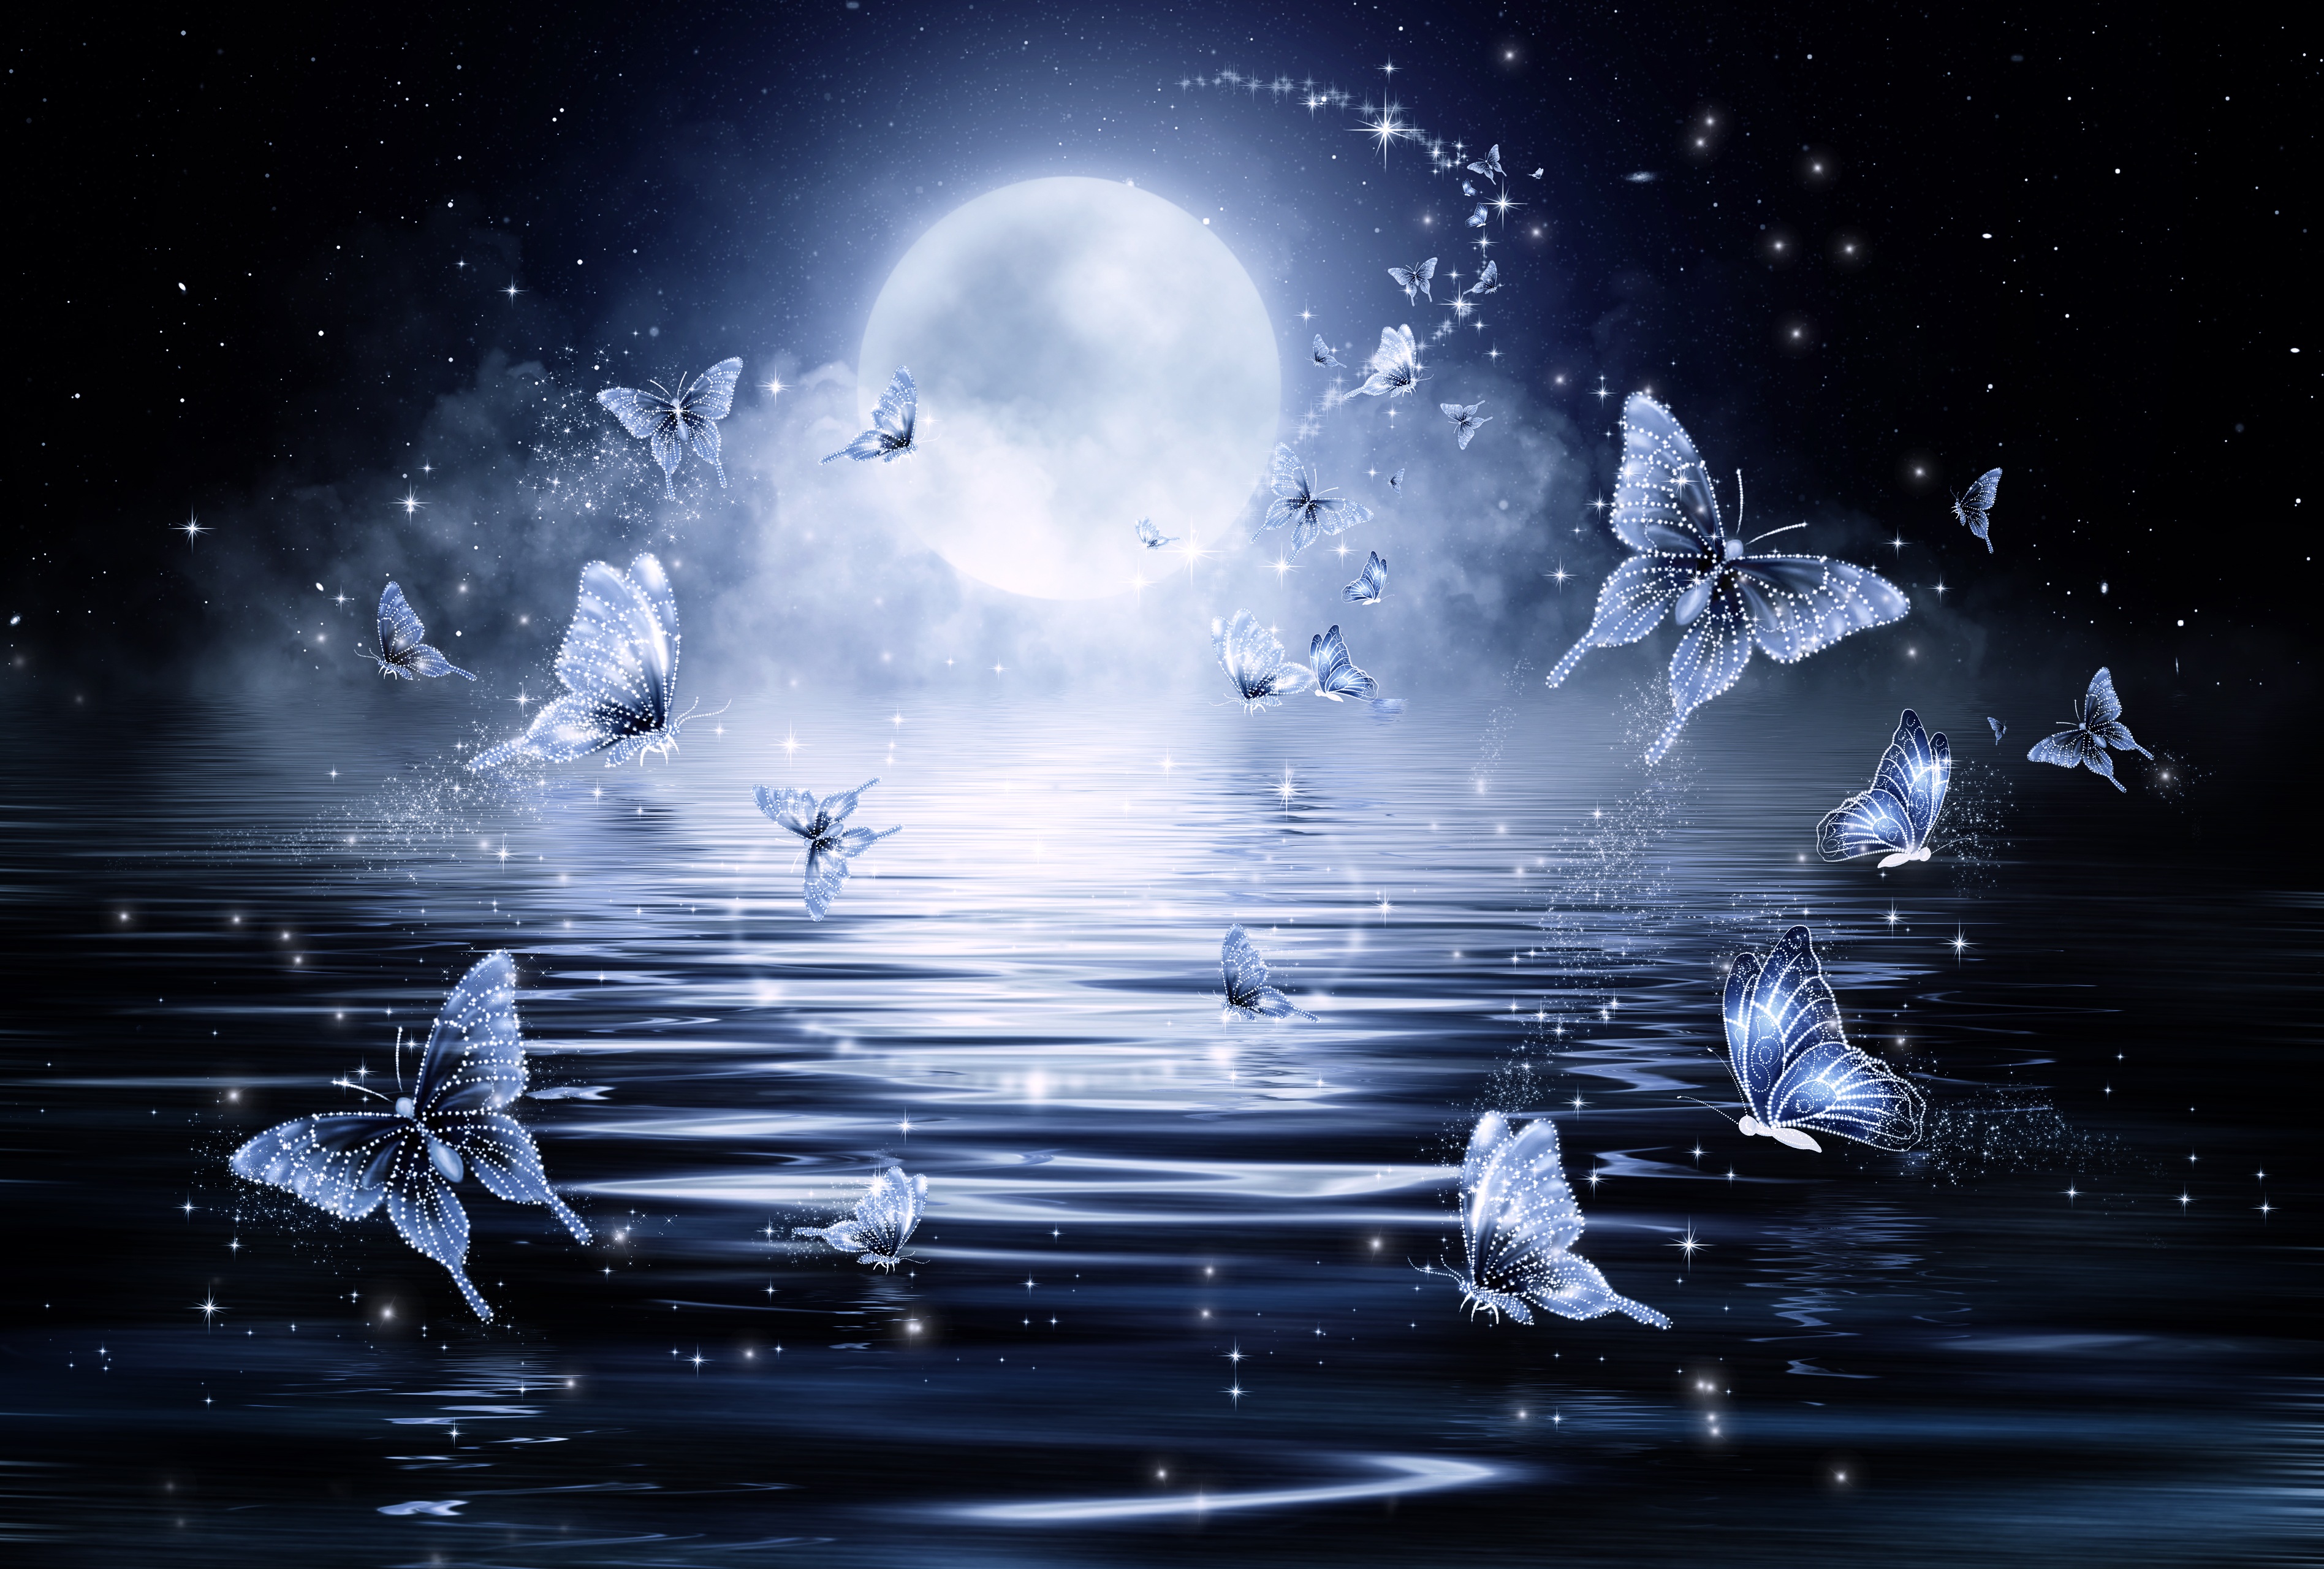 Blue Butterflies in the Moonlight by Larisa Koshkina